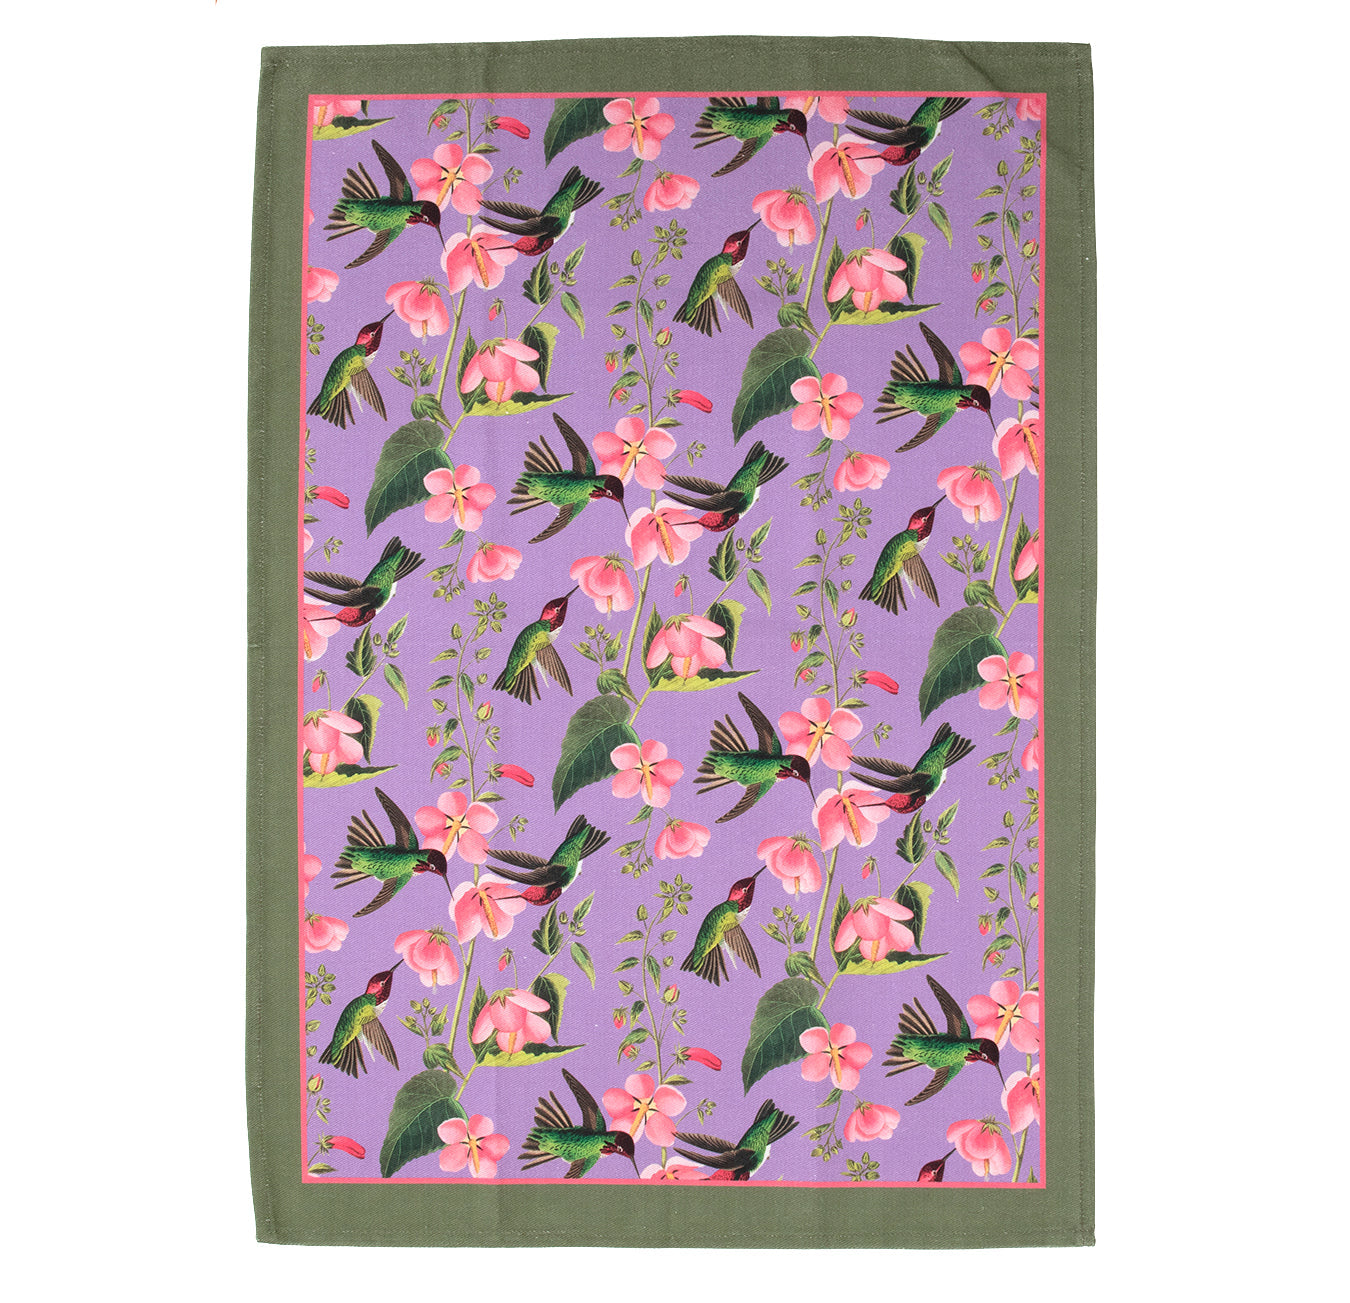 Anna's Hummingbird Tea Towel